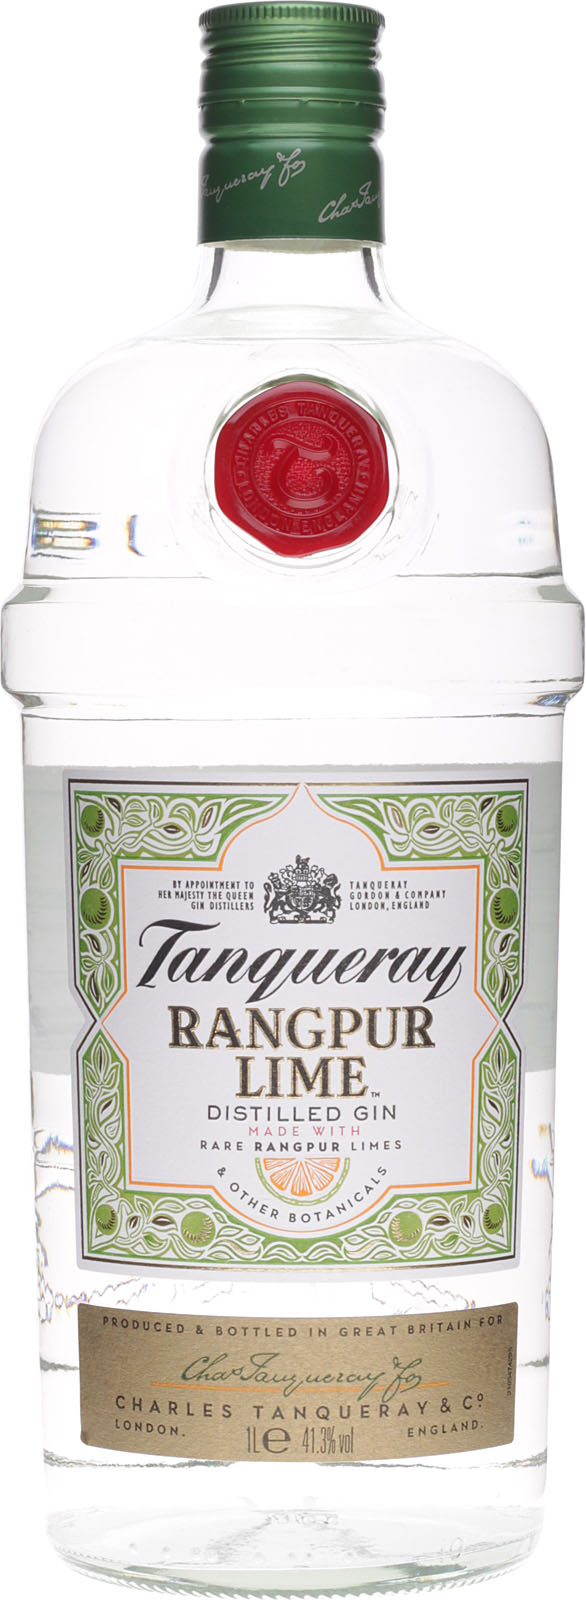 Gin hier uns bei Rangpur Tanqueray im Onlineshop